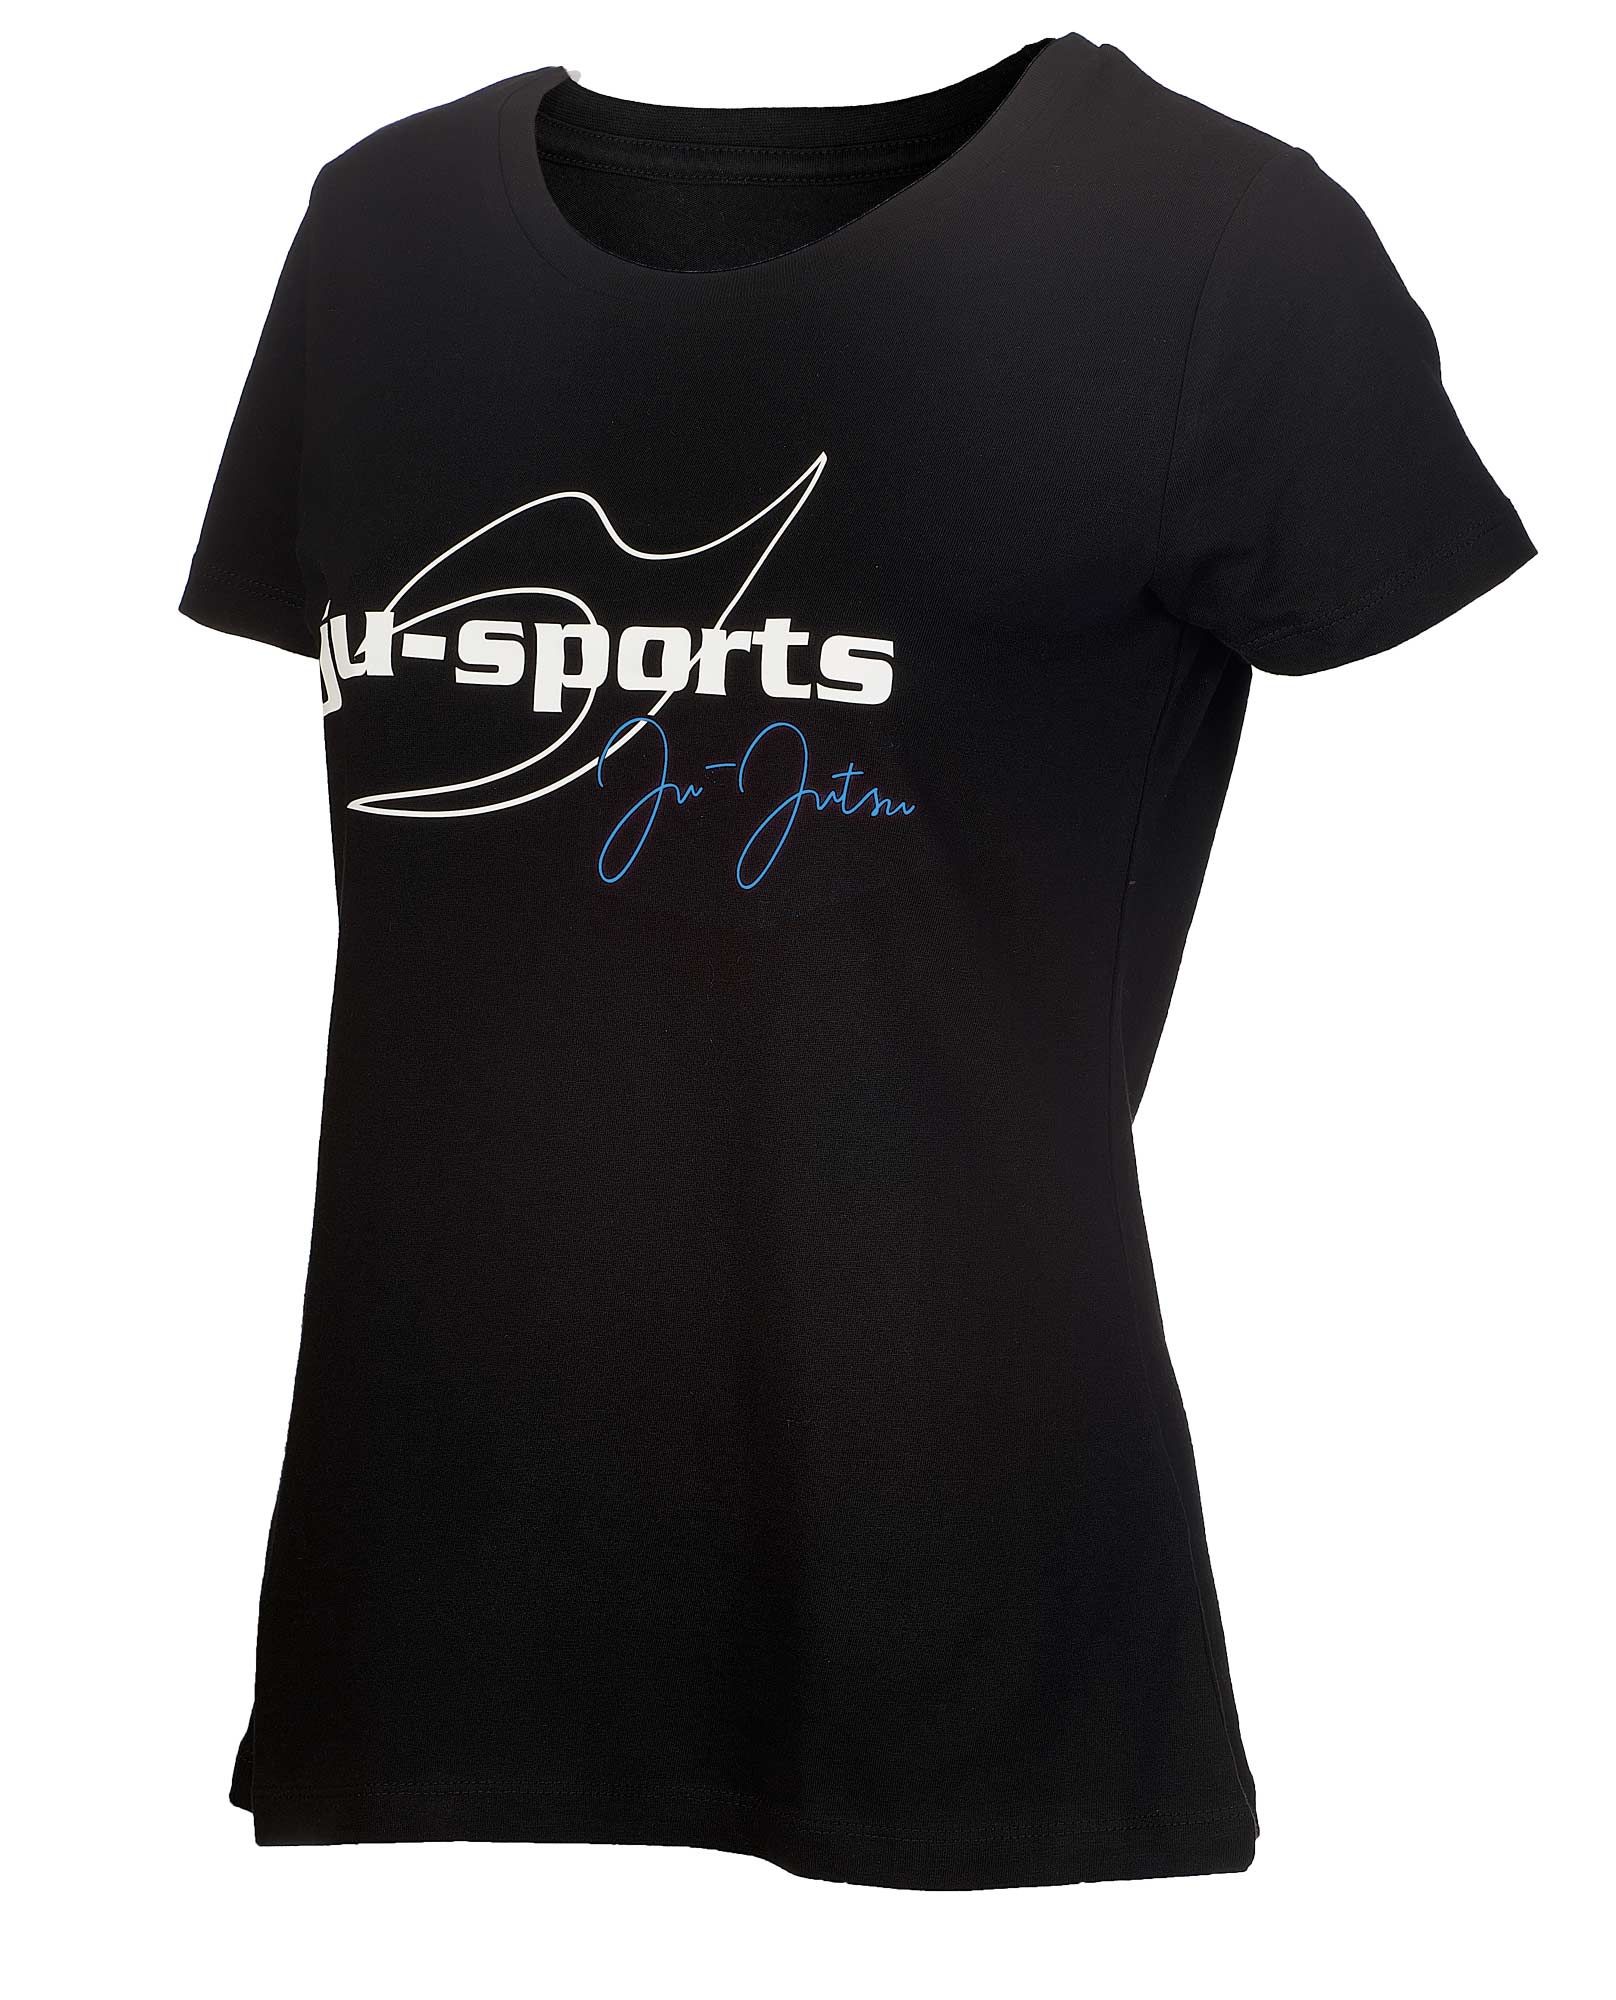 Ju-Sports Signature Line "Ju-Jutsu" T-Shirt ladycut